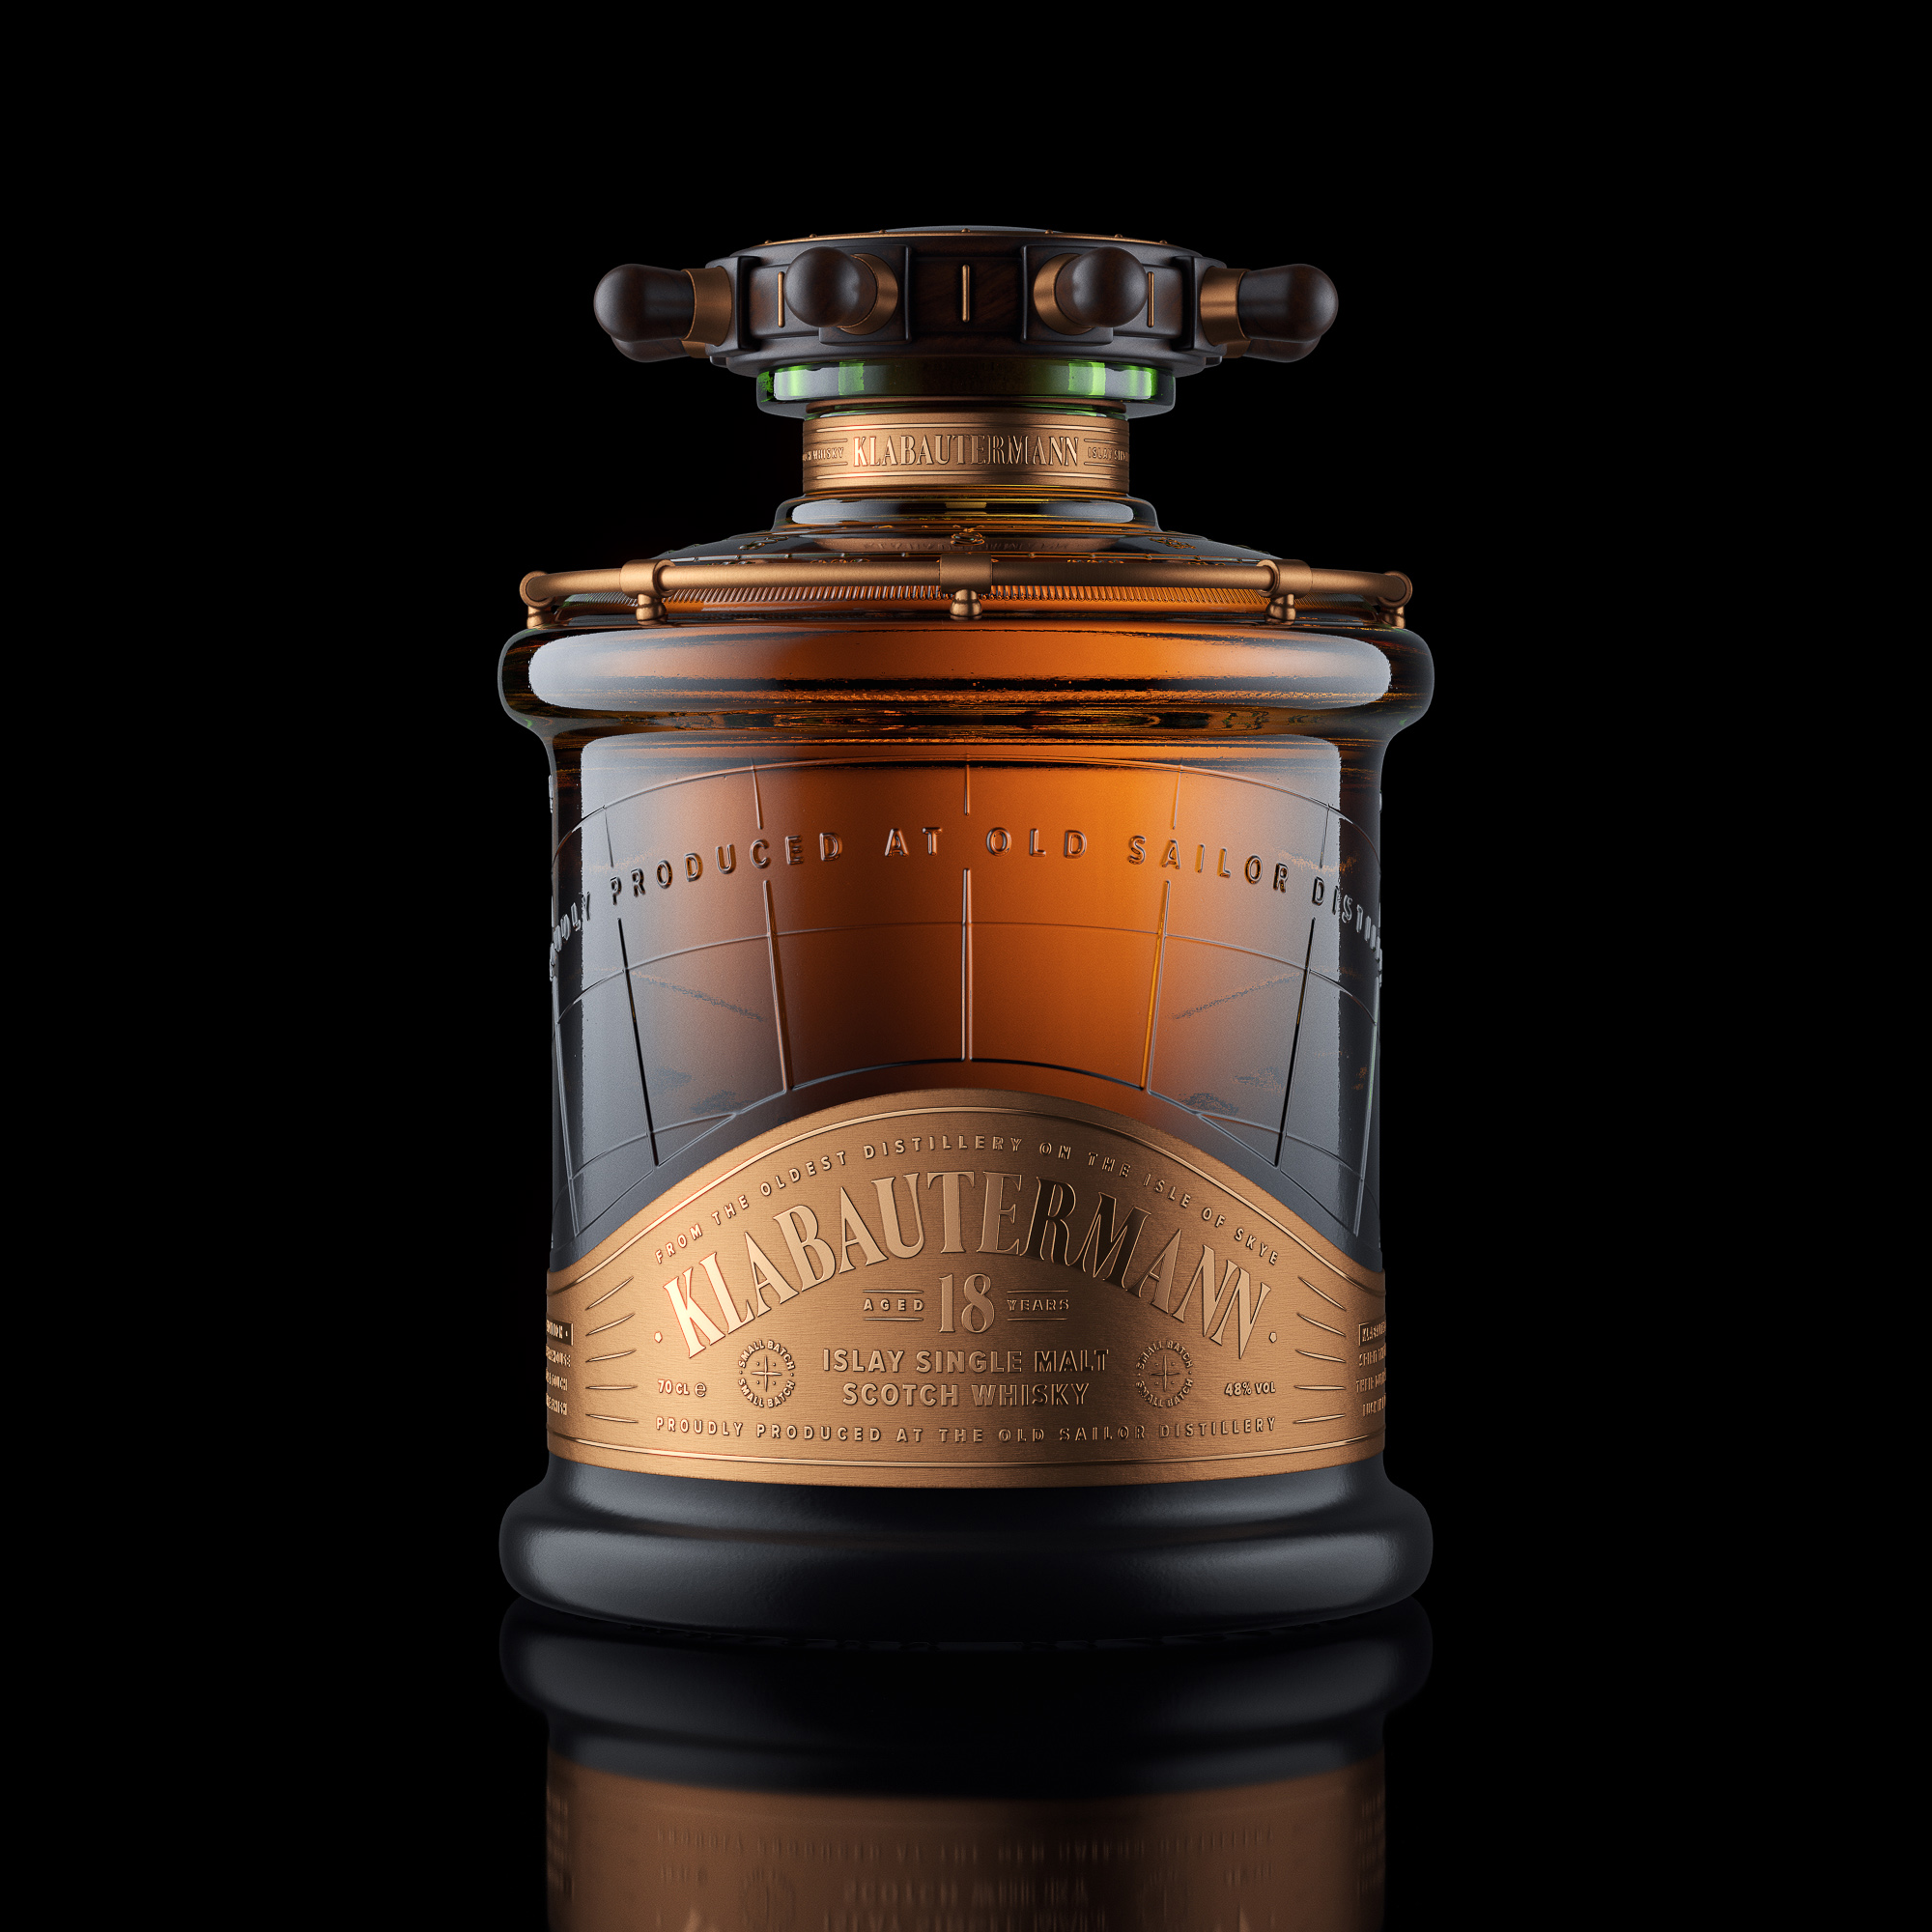 CGI Concept of Klabautermann Islay Single Malt Whisky